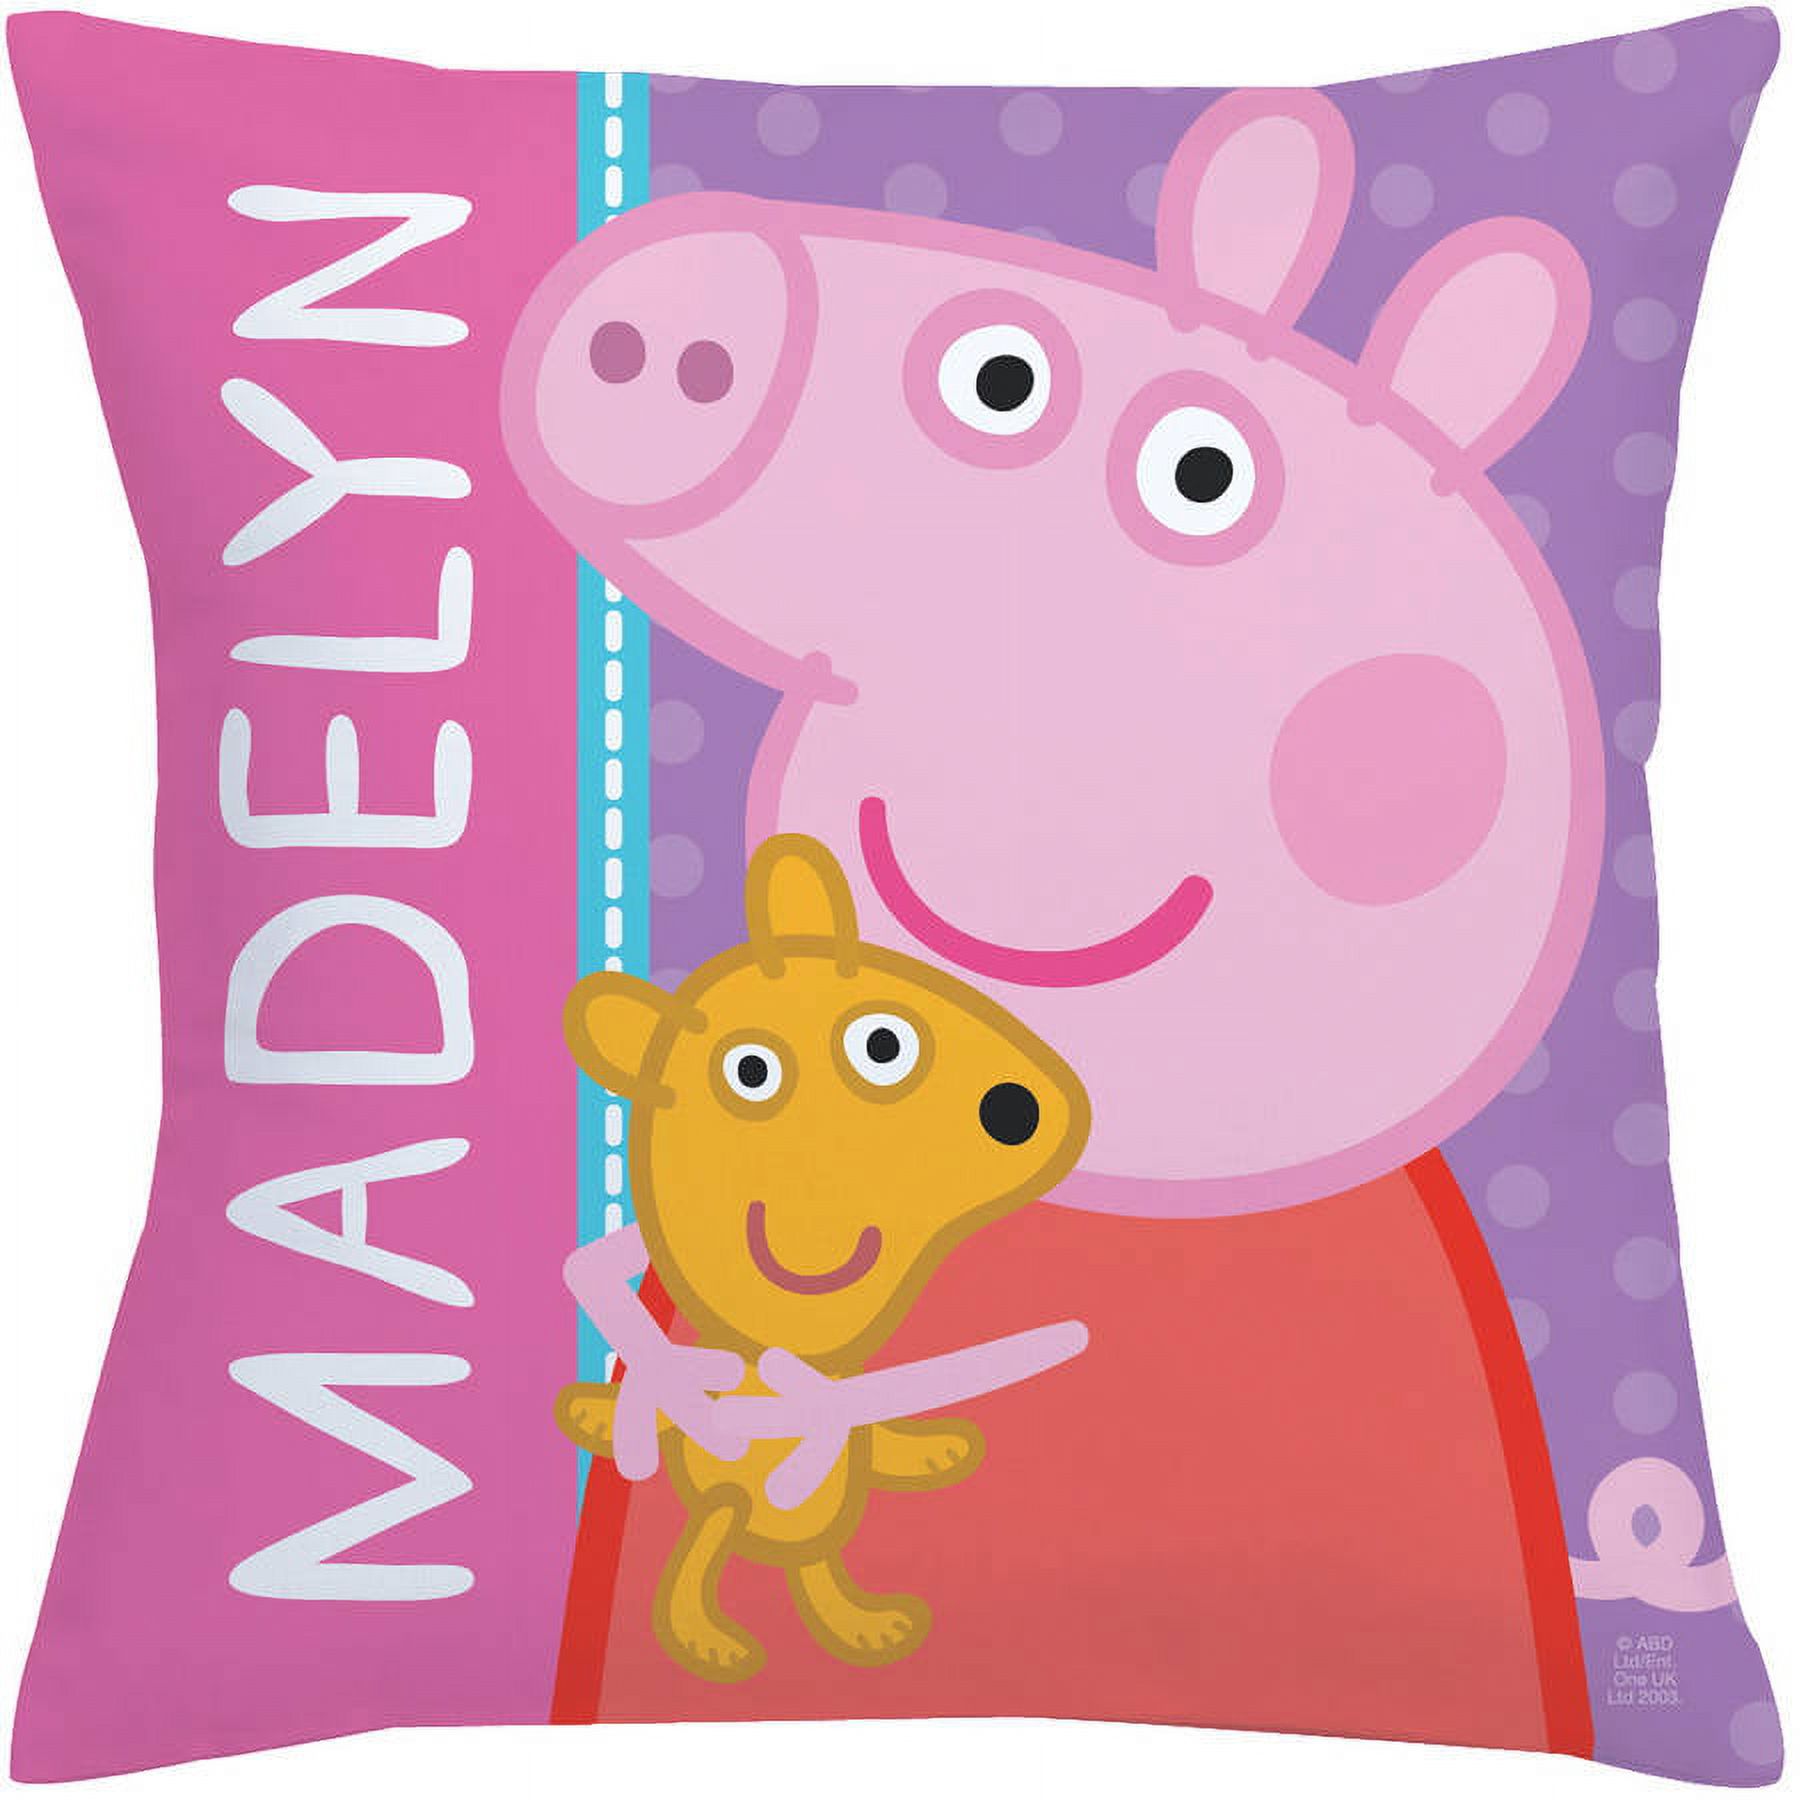 Personalized Peppa Pig Throw Pillow - Big Hug 14" x 14" - image 2 of 2